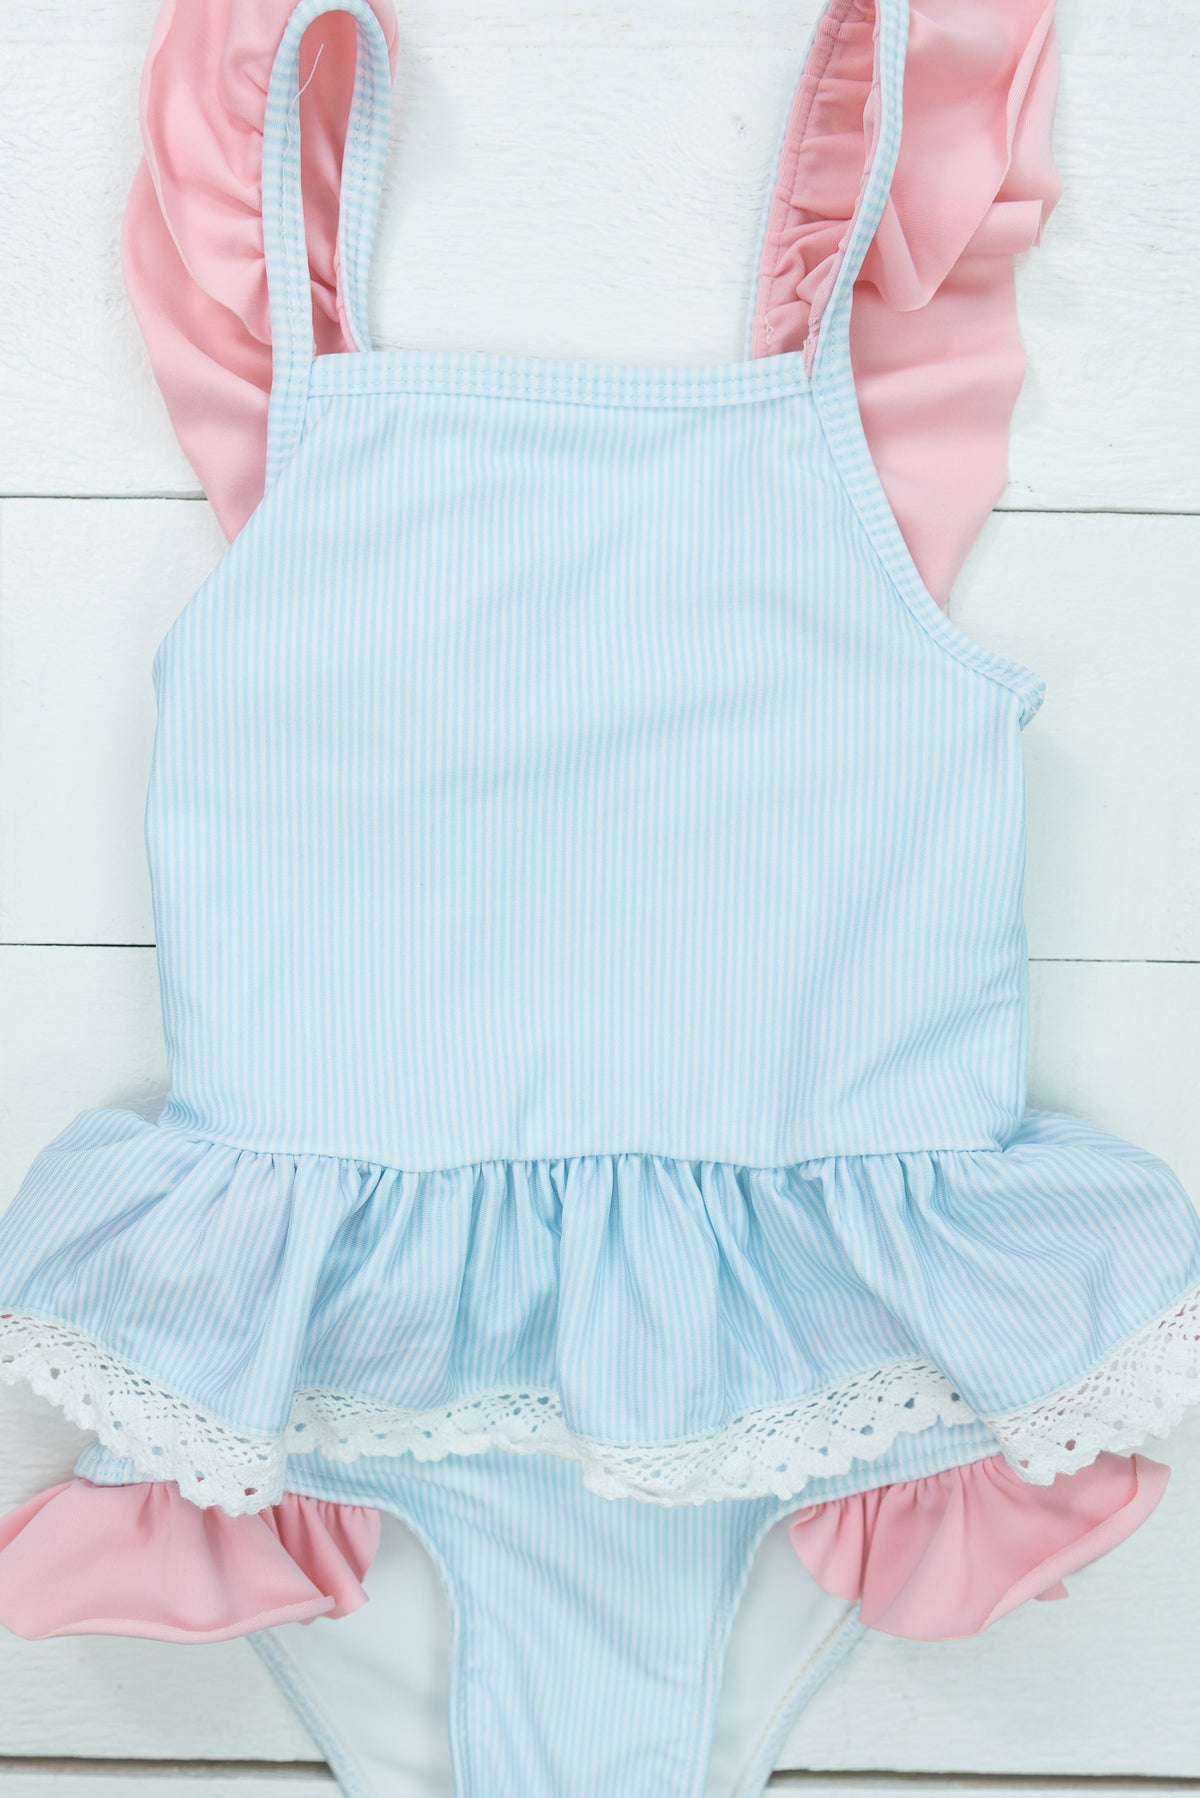 Girls Blue Stripe/Pink Tankini Swimsuit